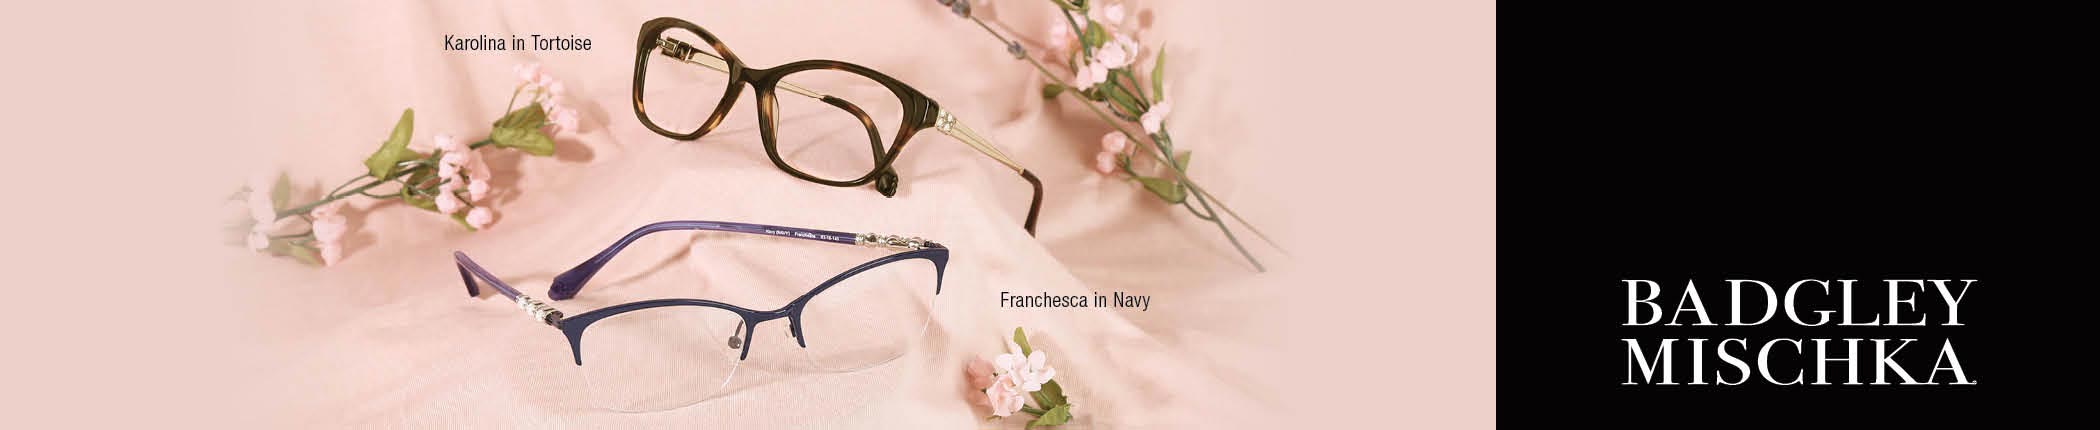 Shop Badgley Mischka Eyeglasses & Sunglasses - featuring Badgley Mischka Karolina and Badgley Mischka Franchesca